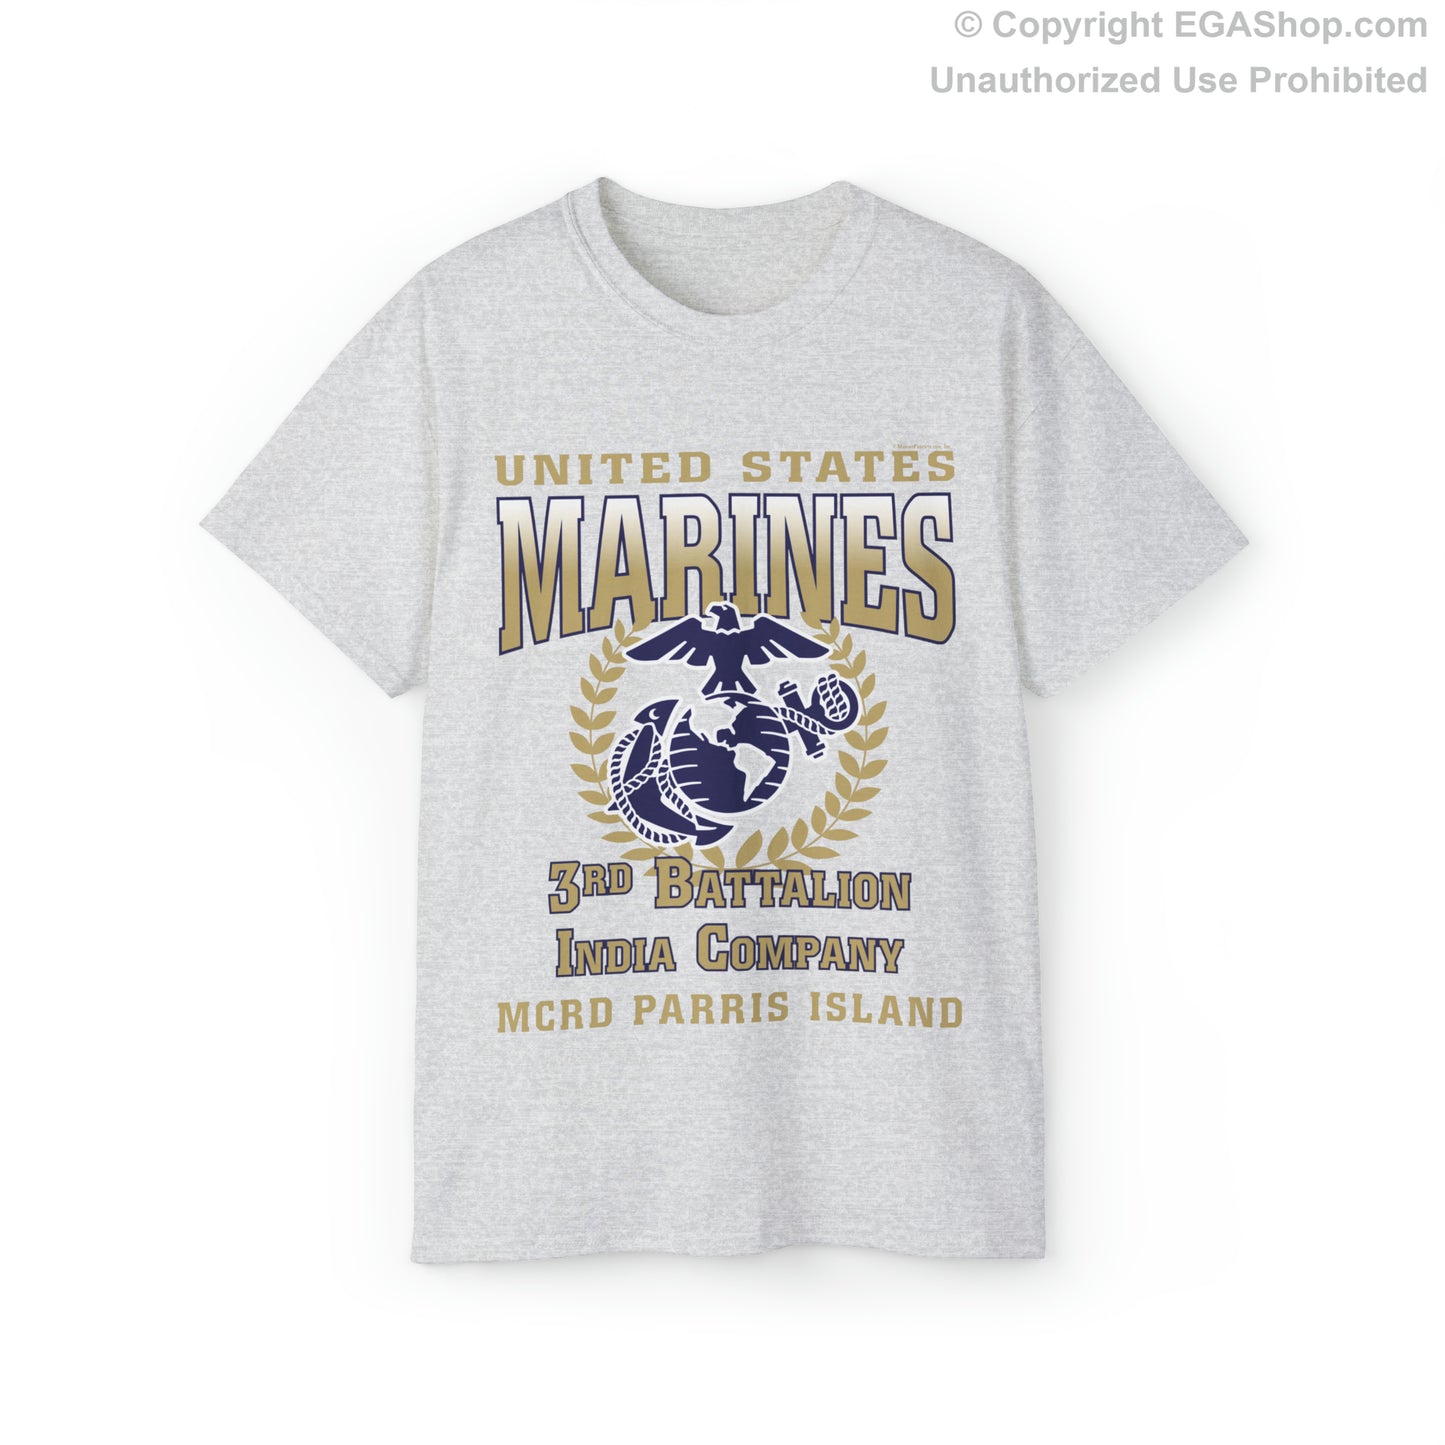 T-Shirt: India Co. MCRD Parris Island (EGA + Back Proud Family)